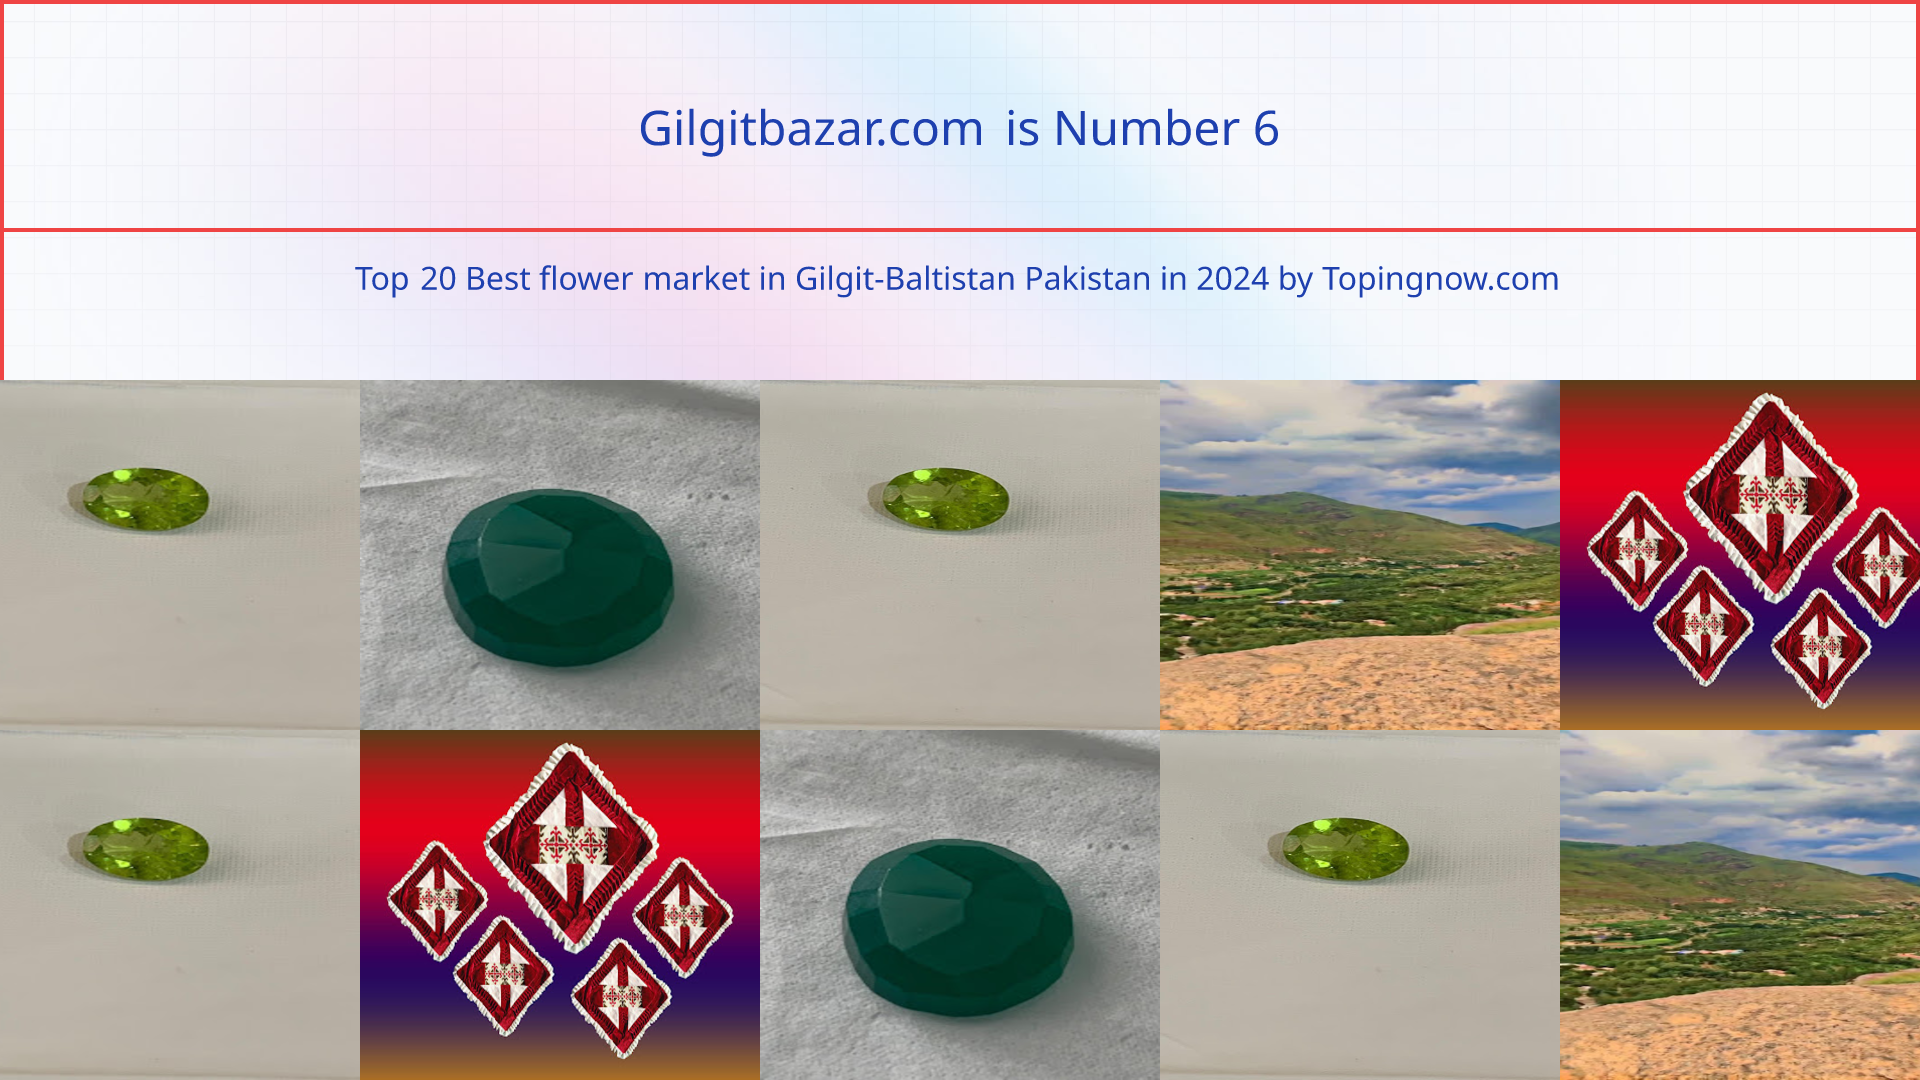 Gilgitbazar.com: Top 20 Best flower market in Gilgit-Baltistan Pakistan in 2024